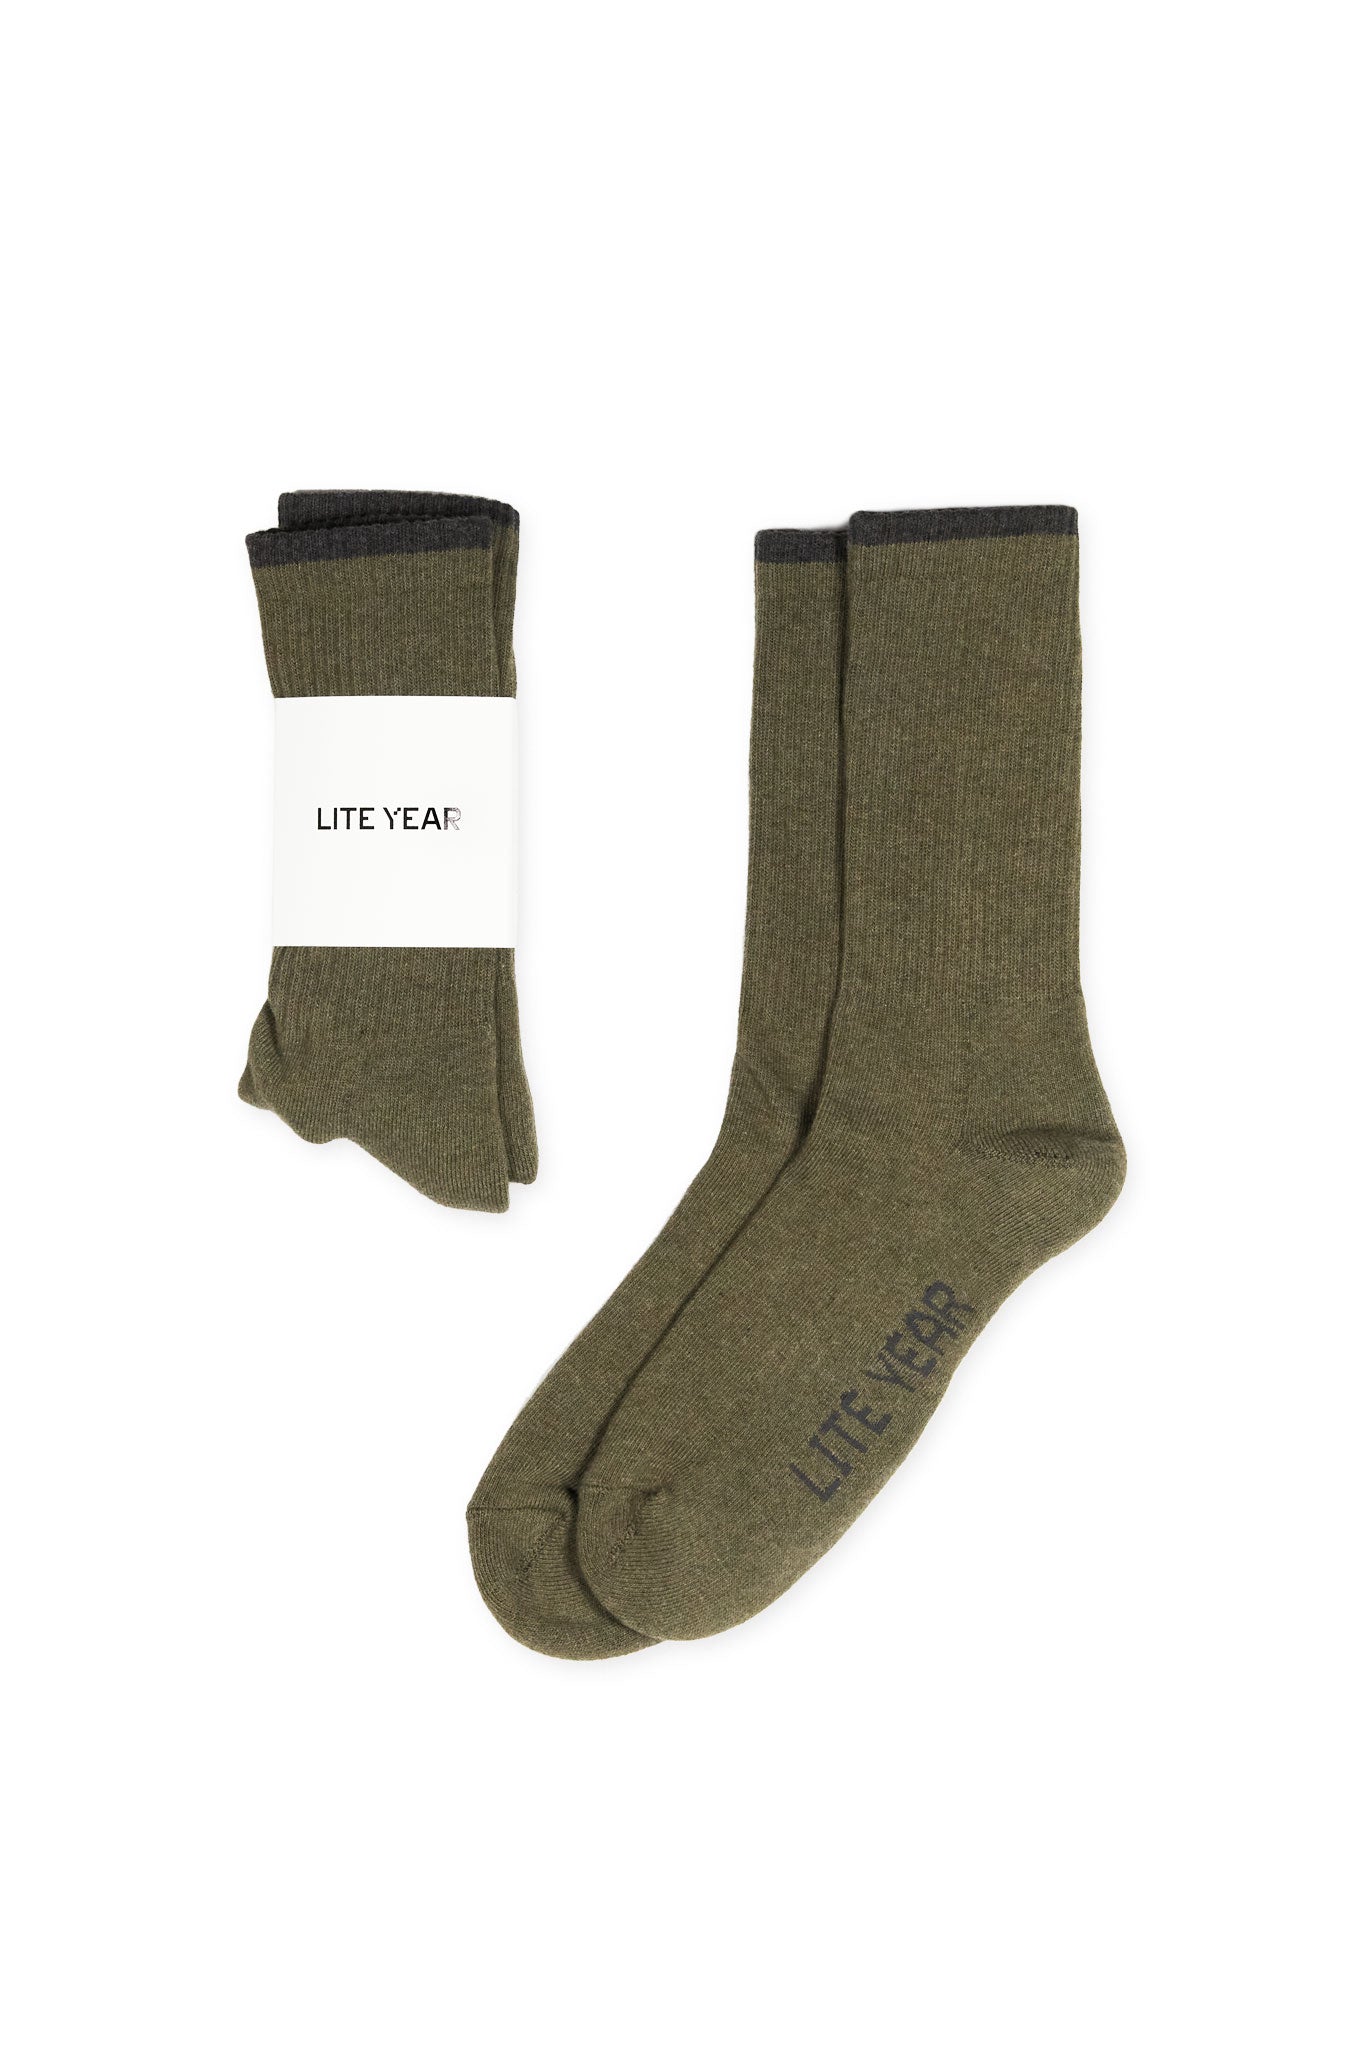 Cotton Cap Crew Socks - Army Green/Charcoal